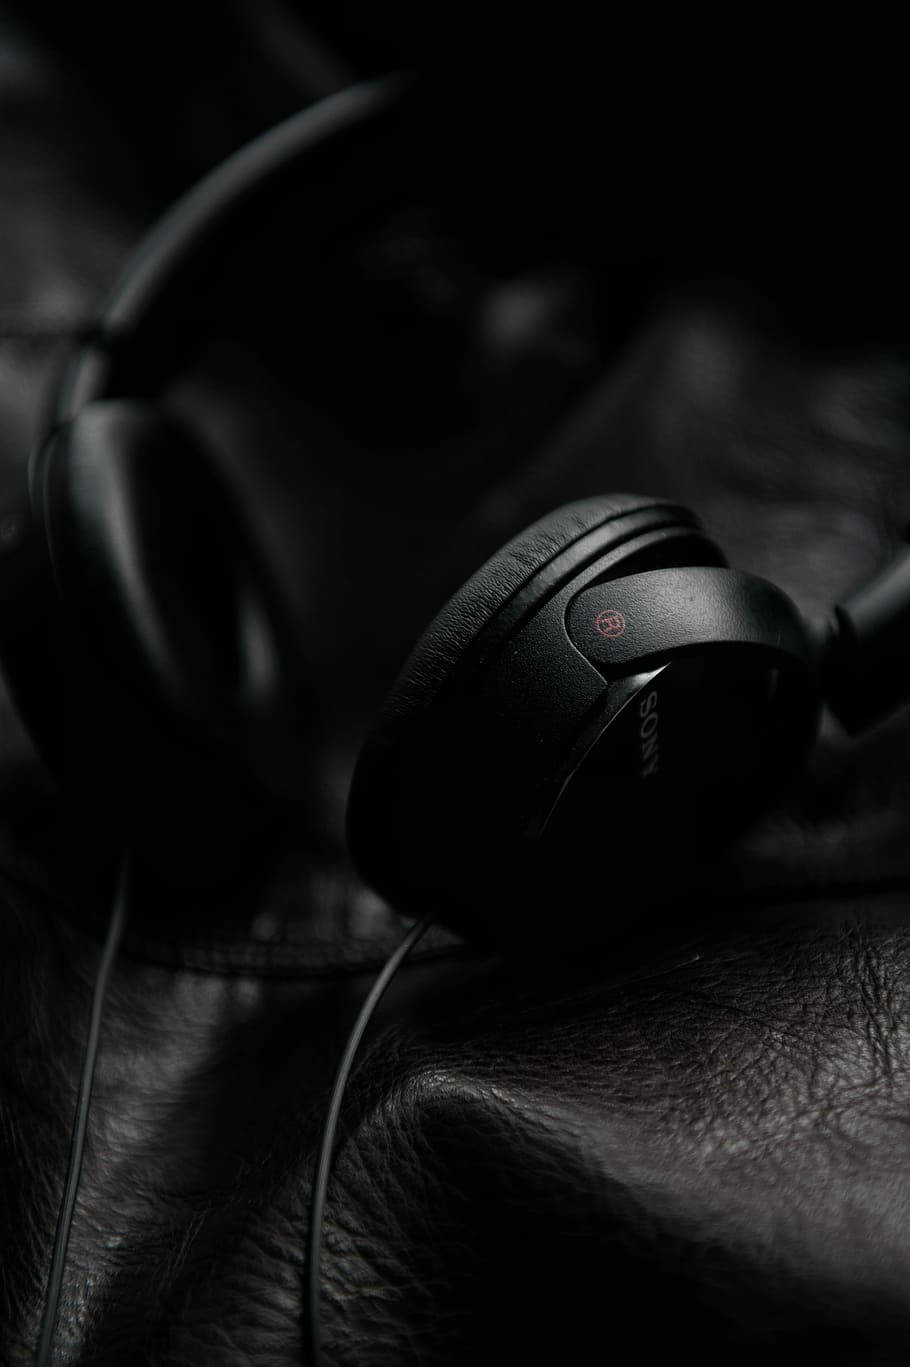 Sony Headphones On Black Leather iPhone Wallpaper